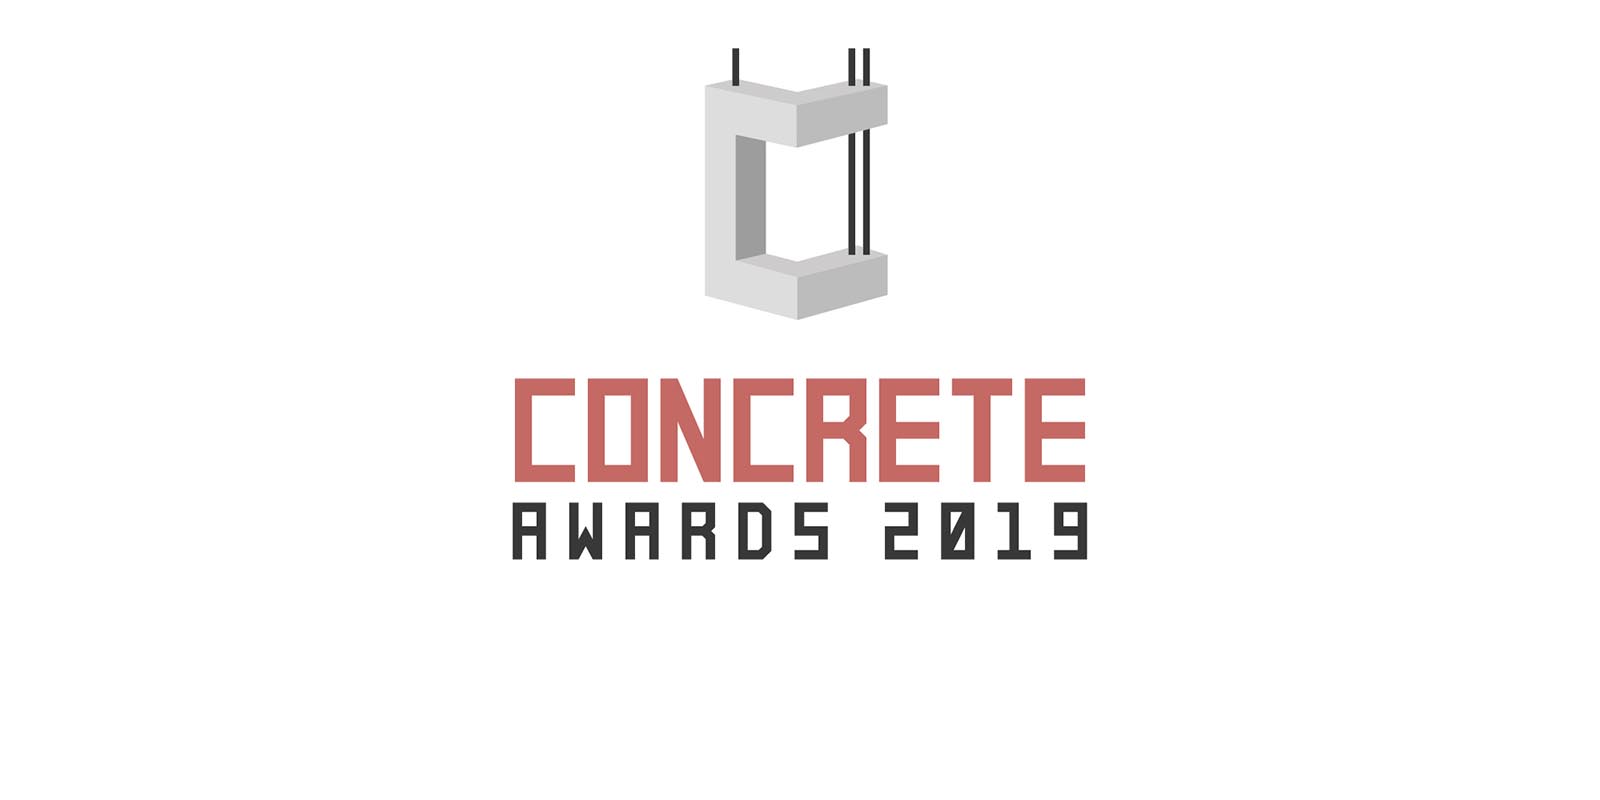 Archisearch Concrete Awards 2019: στην τελική ευθεία για την Τελετή Απονομής